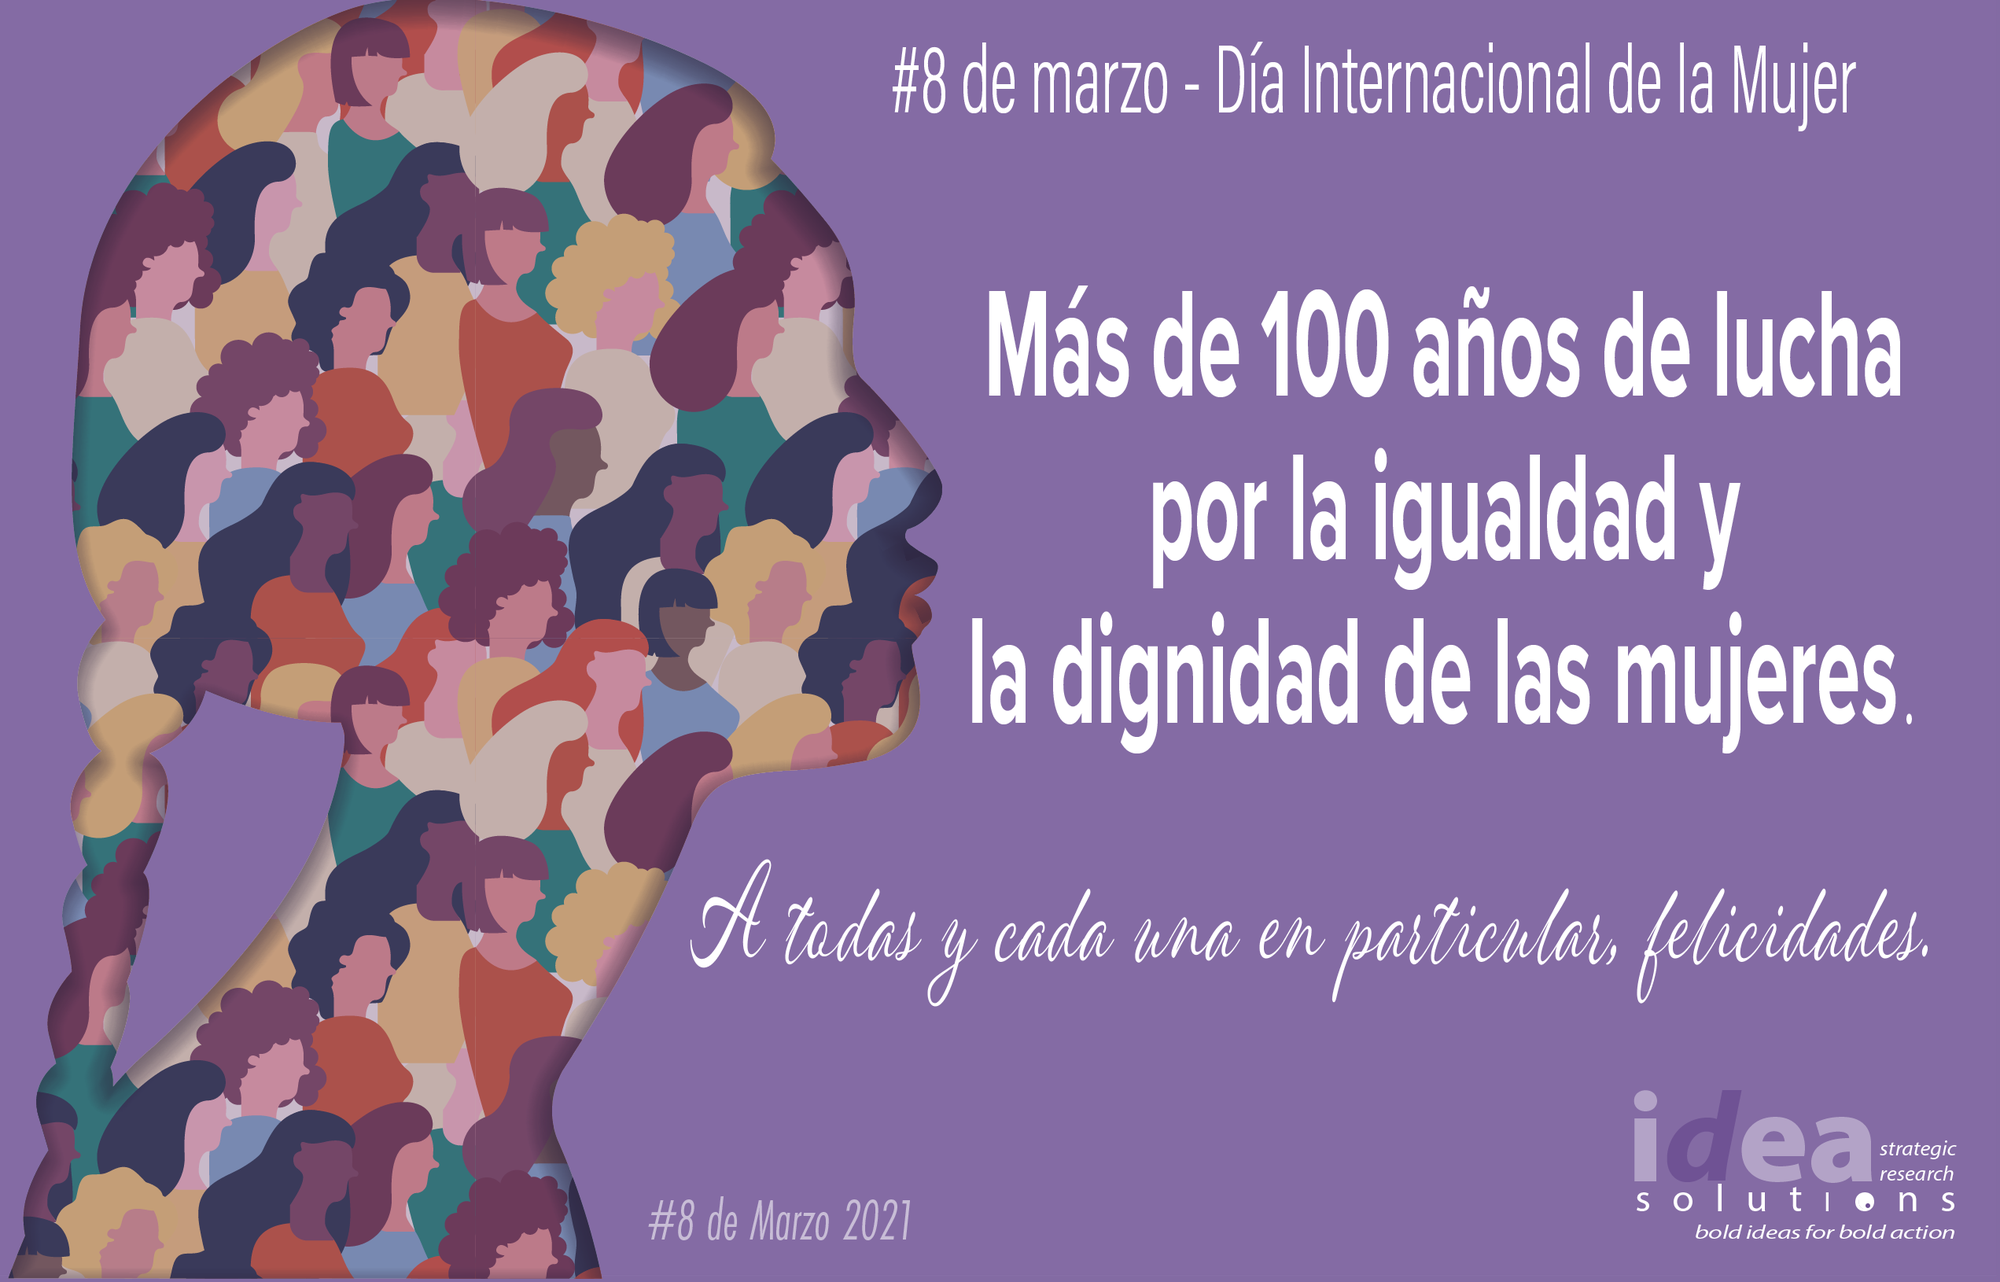 8th March - International Women’s Day